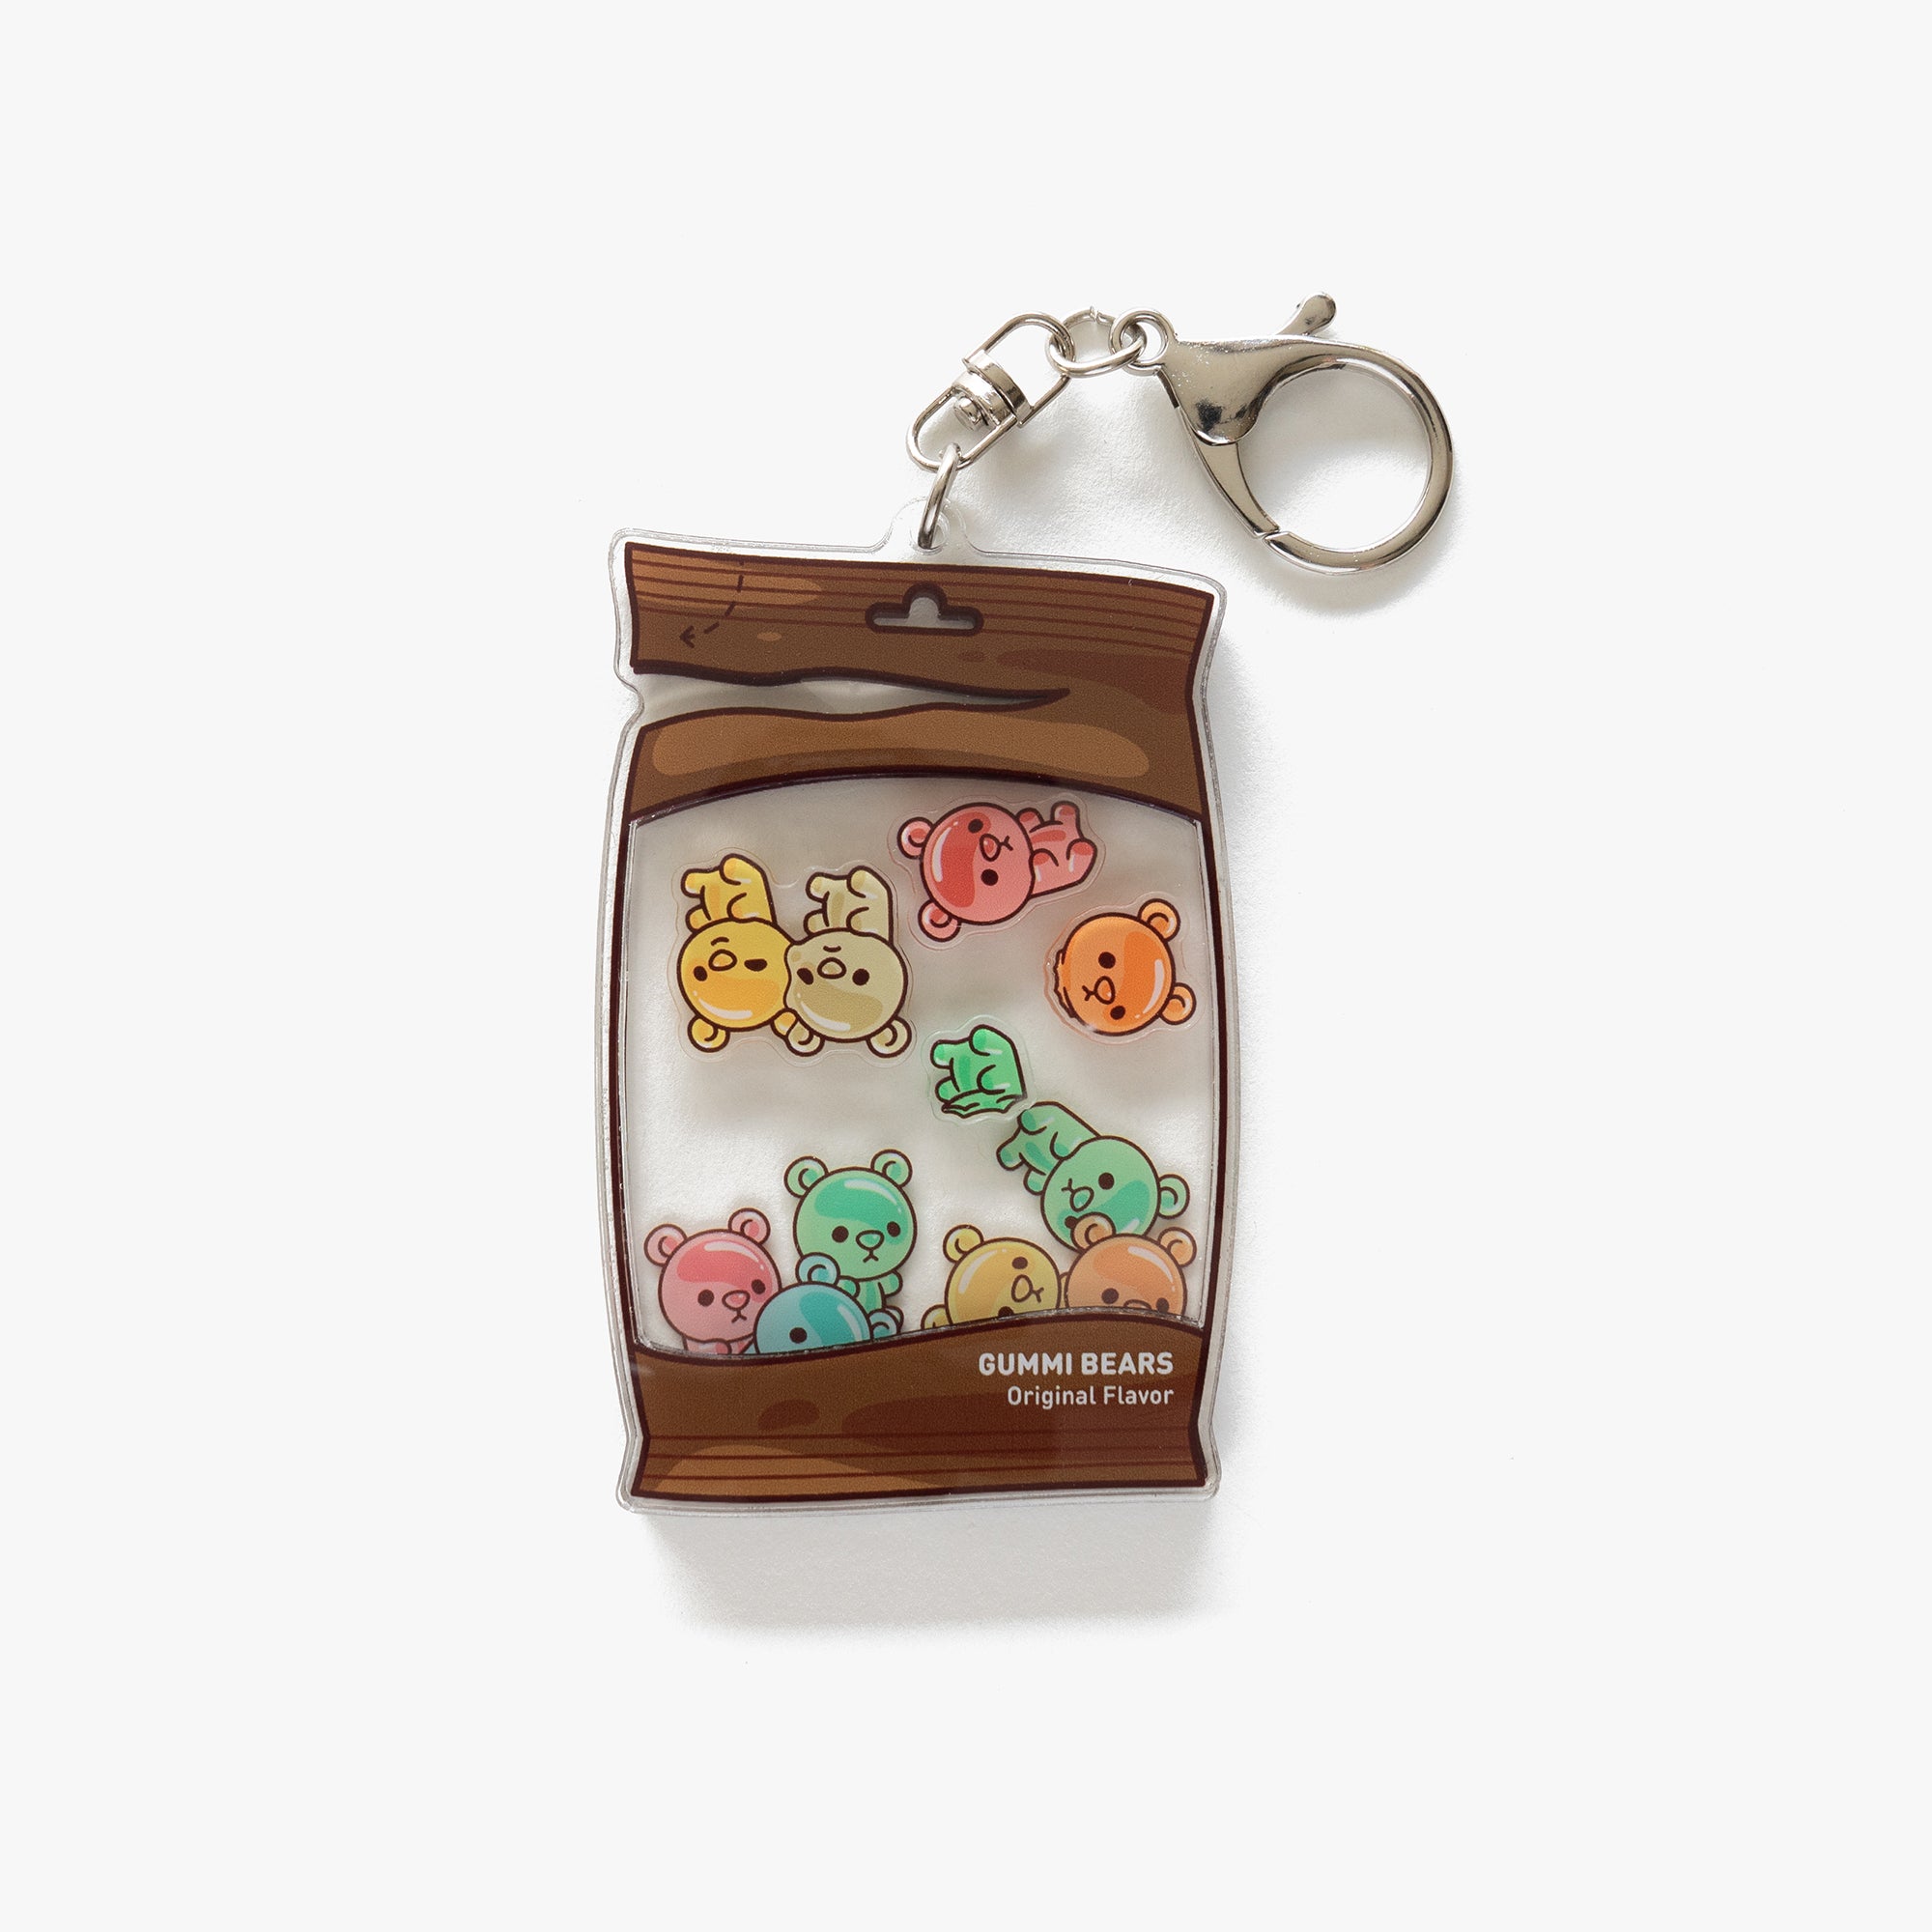 Gummi Bear Shaker Keychain (3.5")